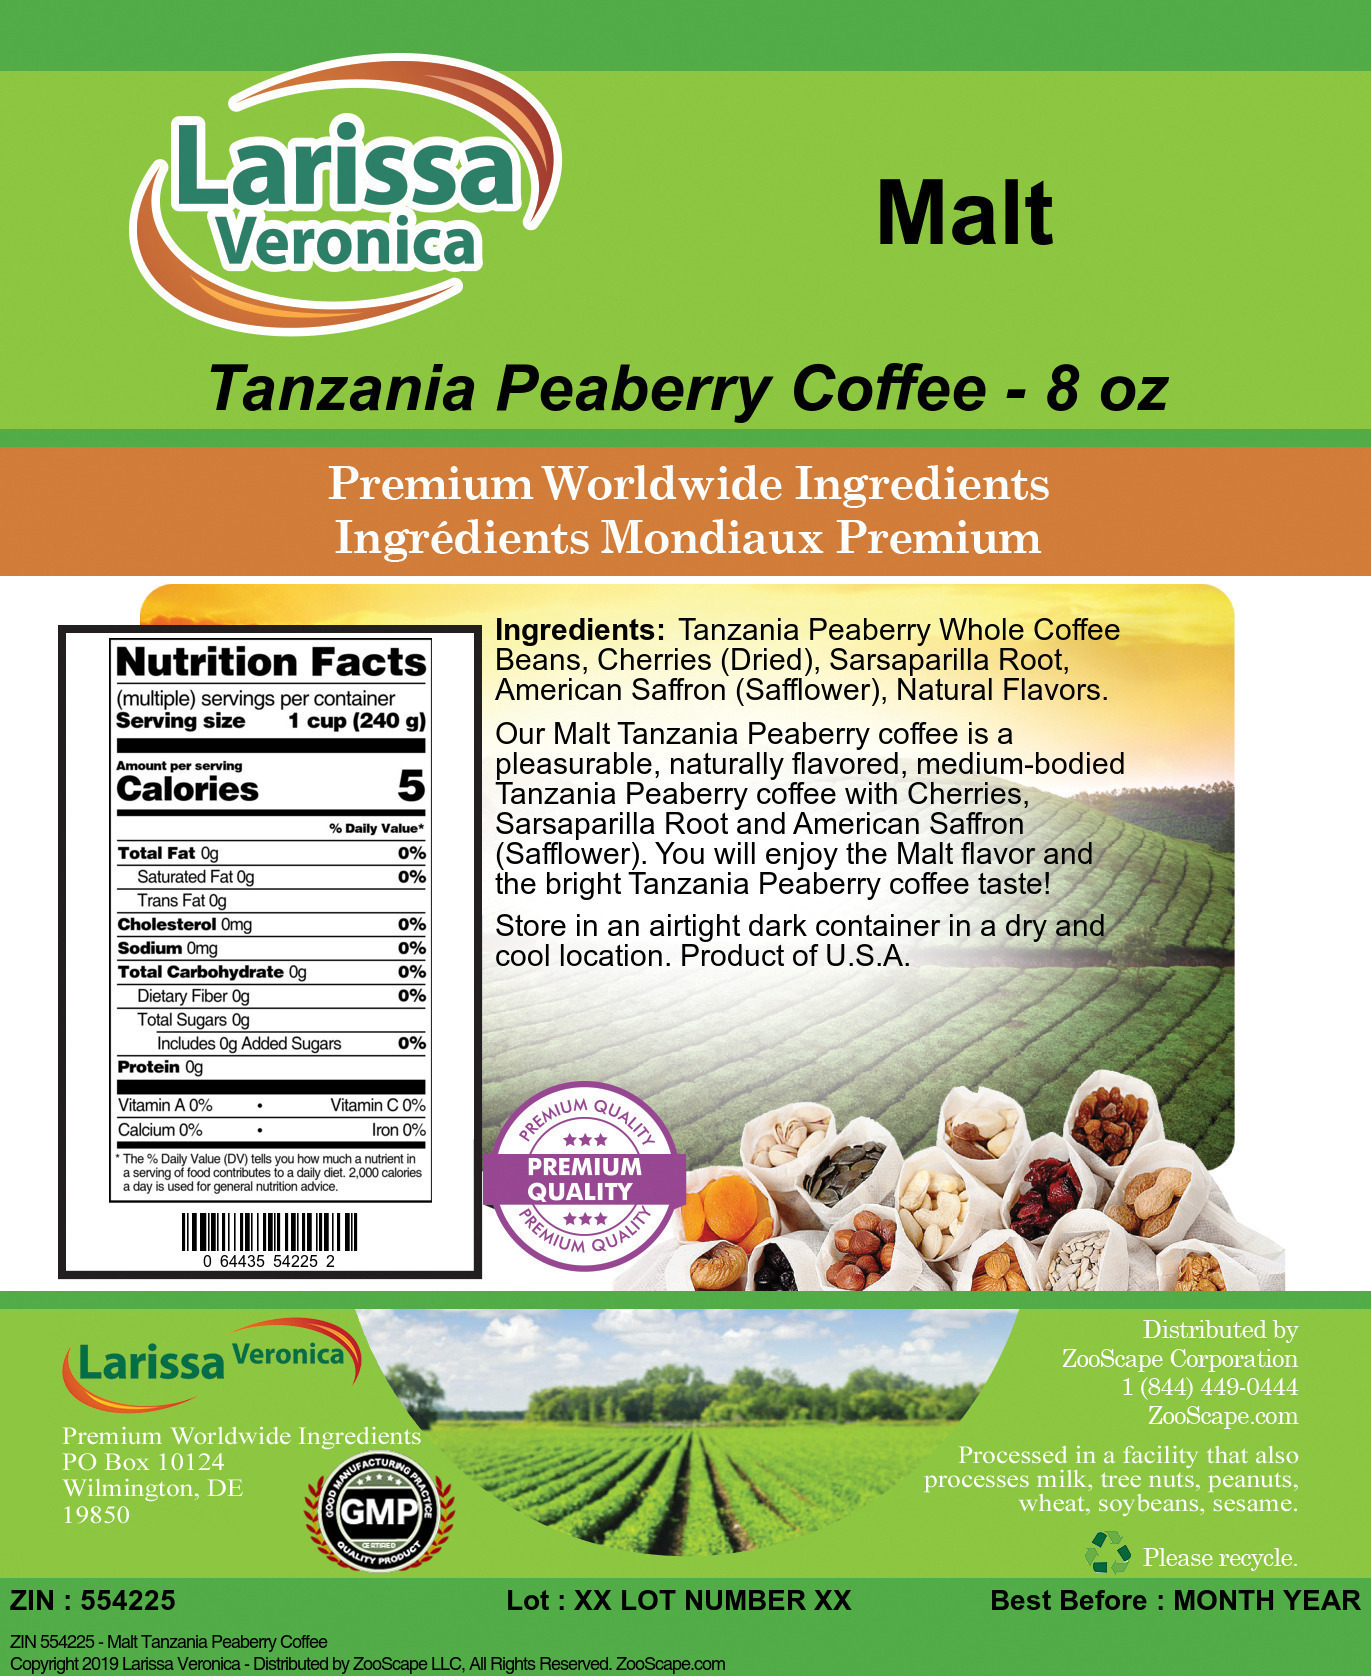 Malt Tanzania Peaberry Coffee - Label